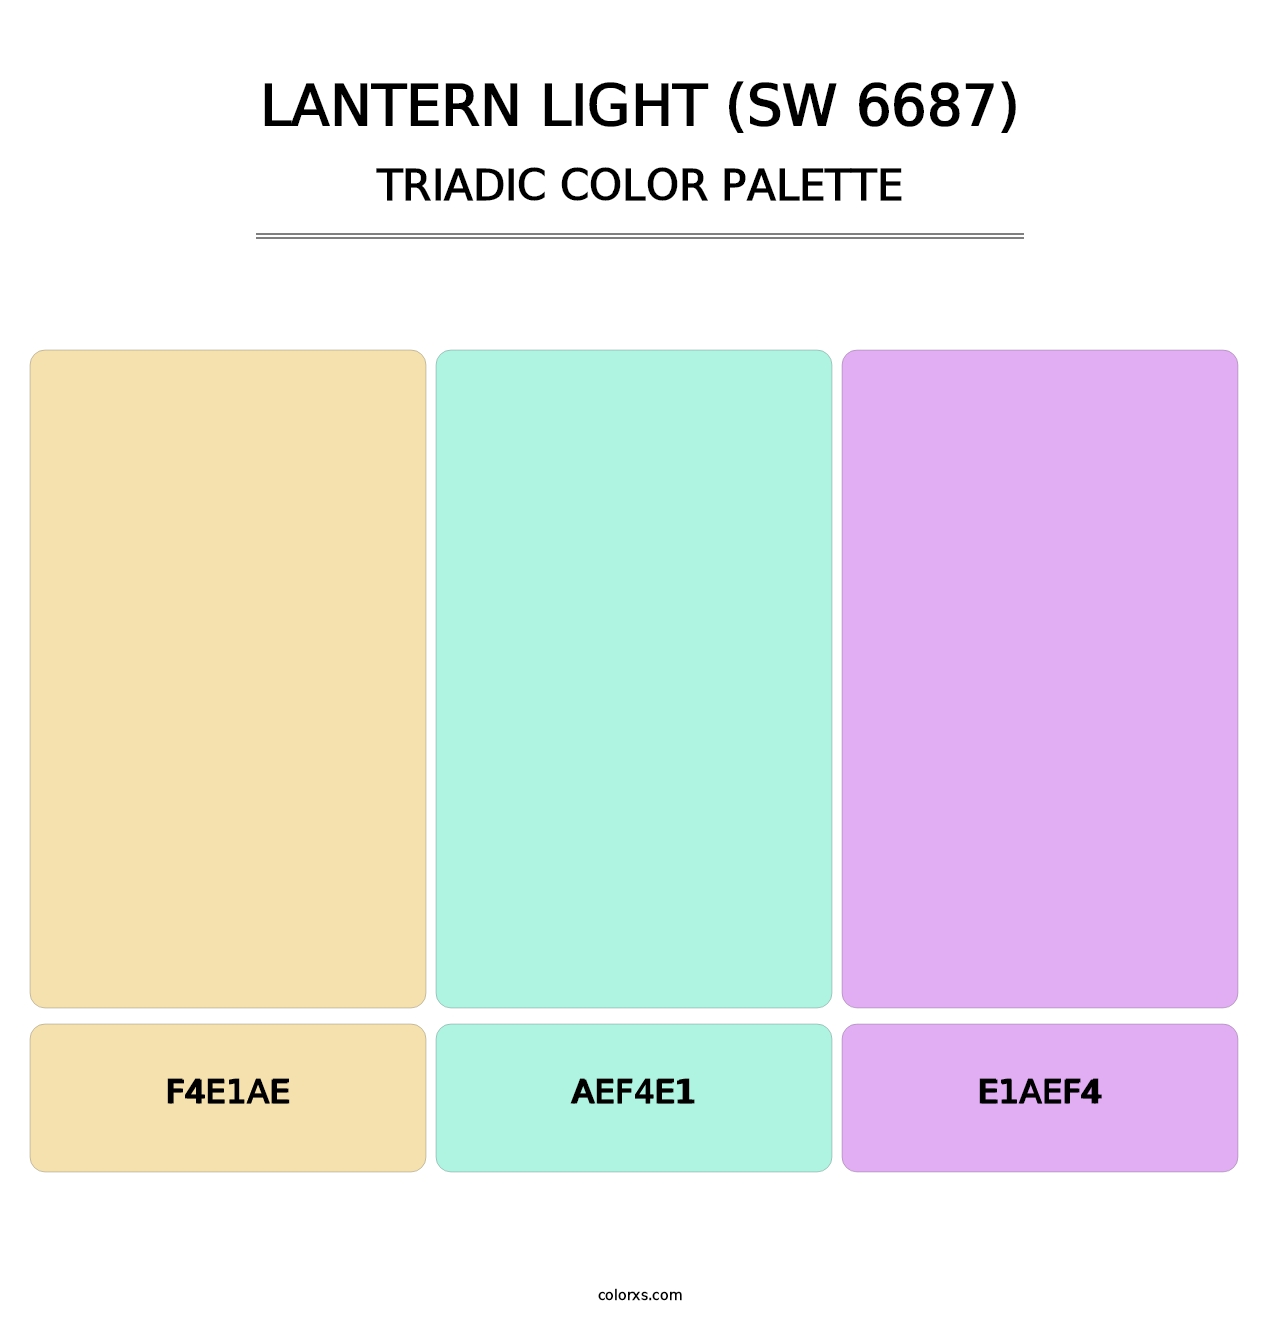 Lantern Light (SW 6687) - Triadic Color Palette